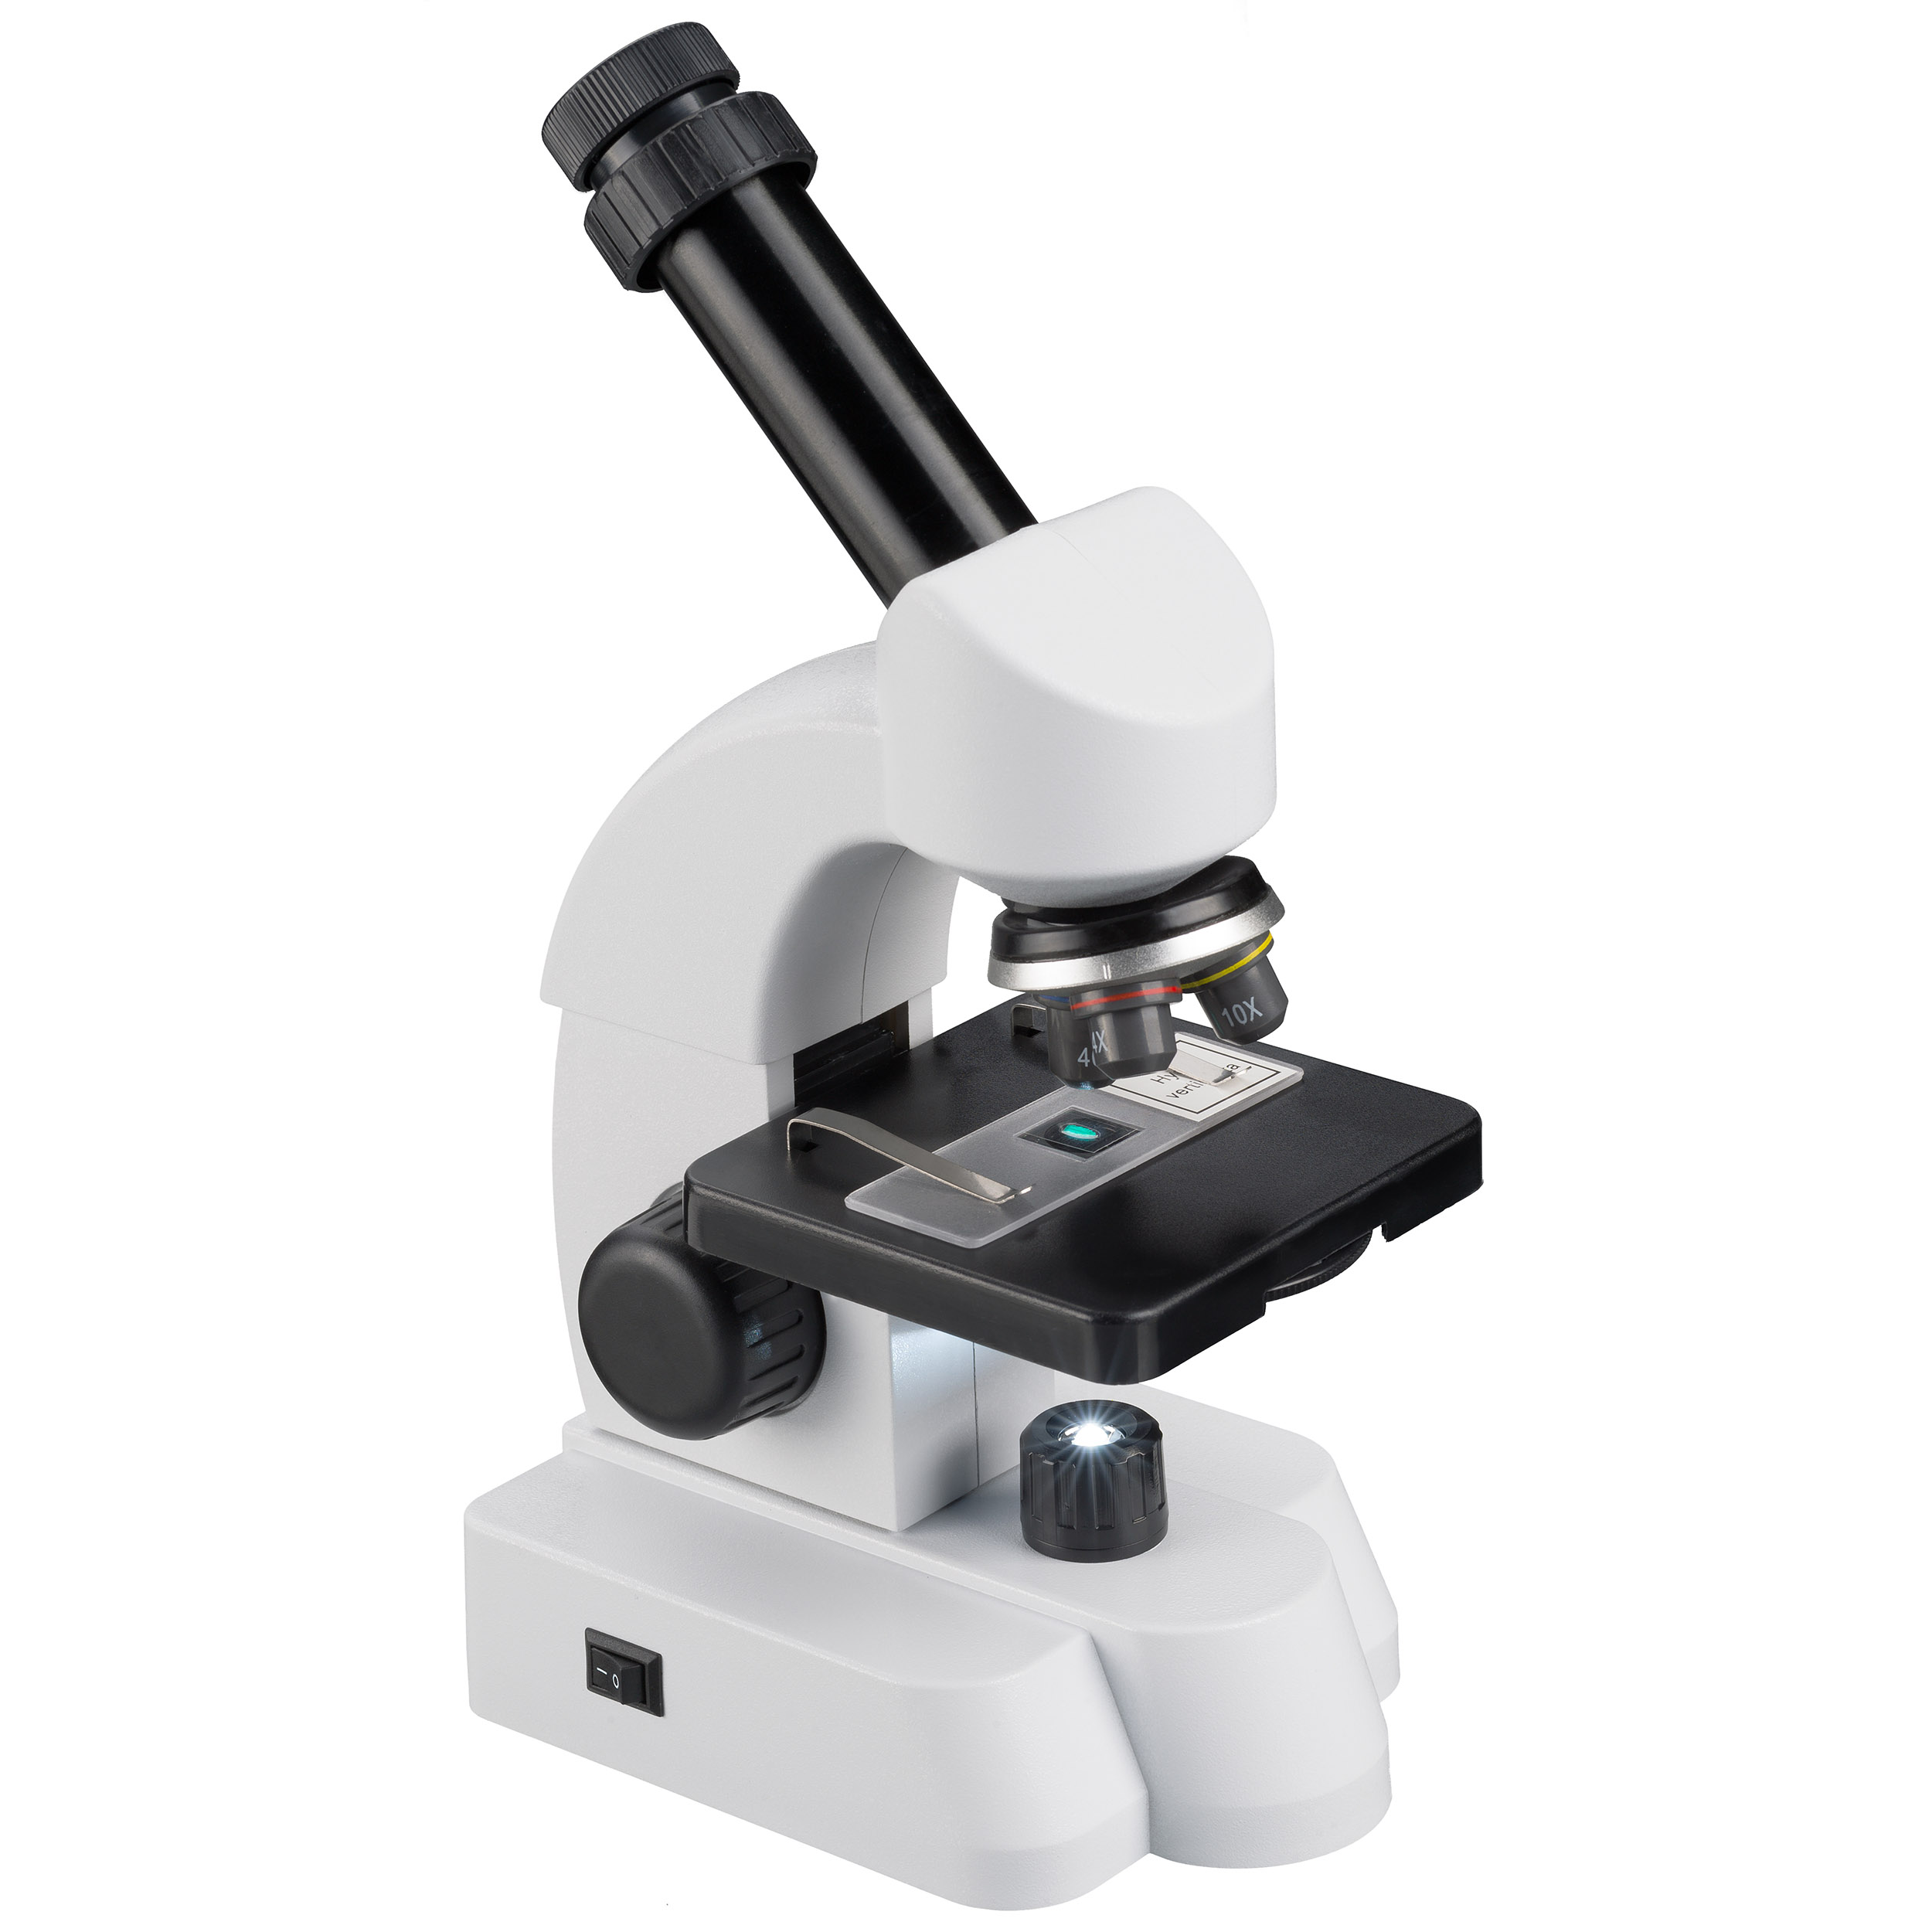 BRESSER JUNIOR Microscope 40x-640x incl. accessory pack